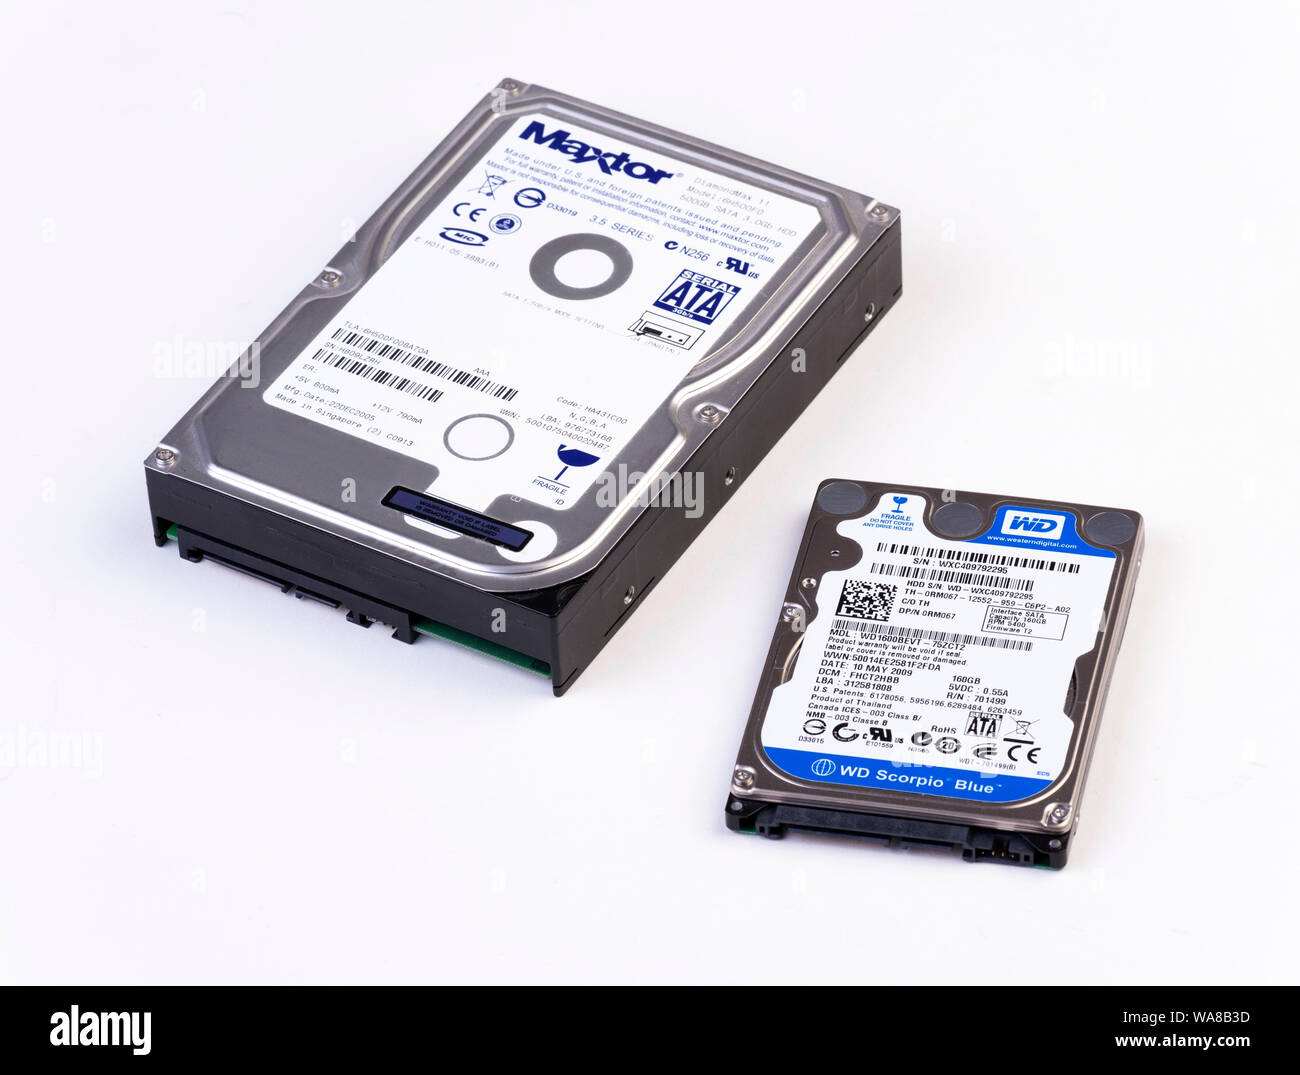 3.5" and 2.5" computer hard drives Stock Photo - Alamy